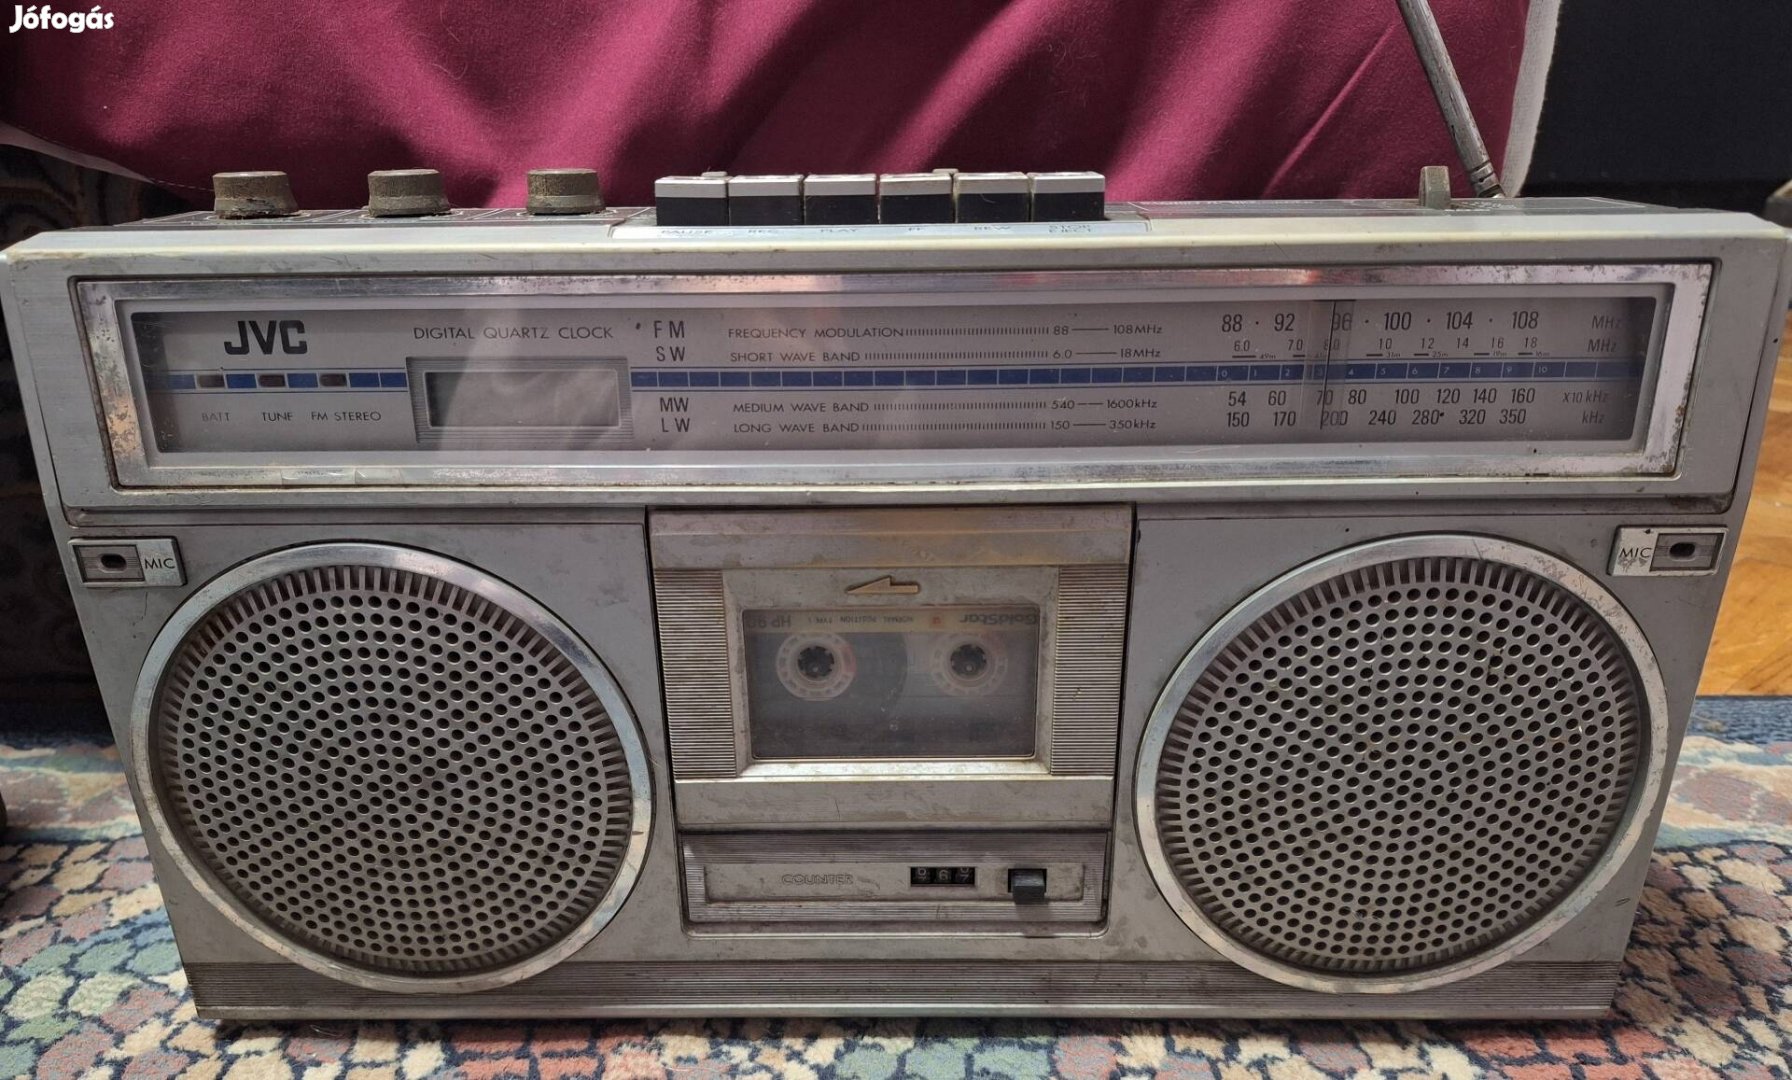 Stereo Radio Cassette Recorder